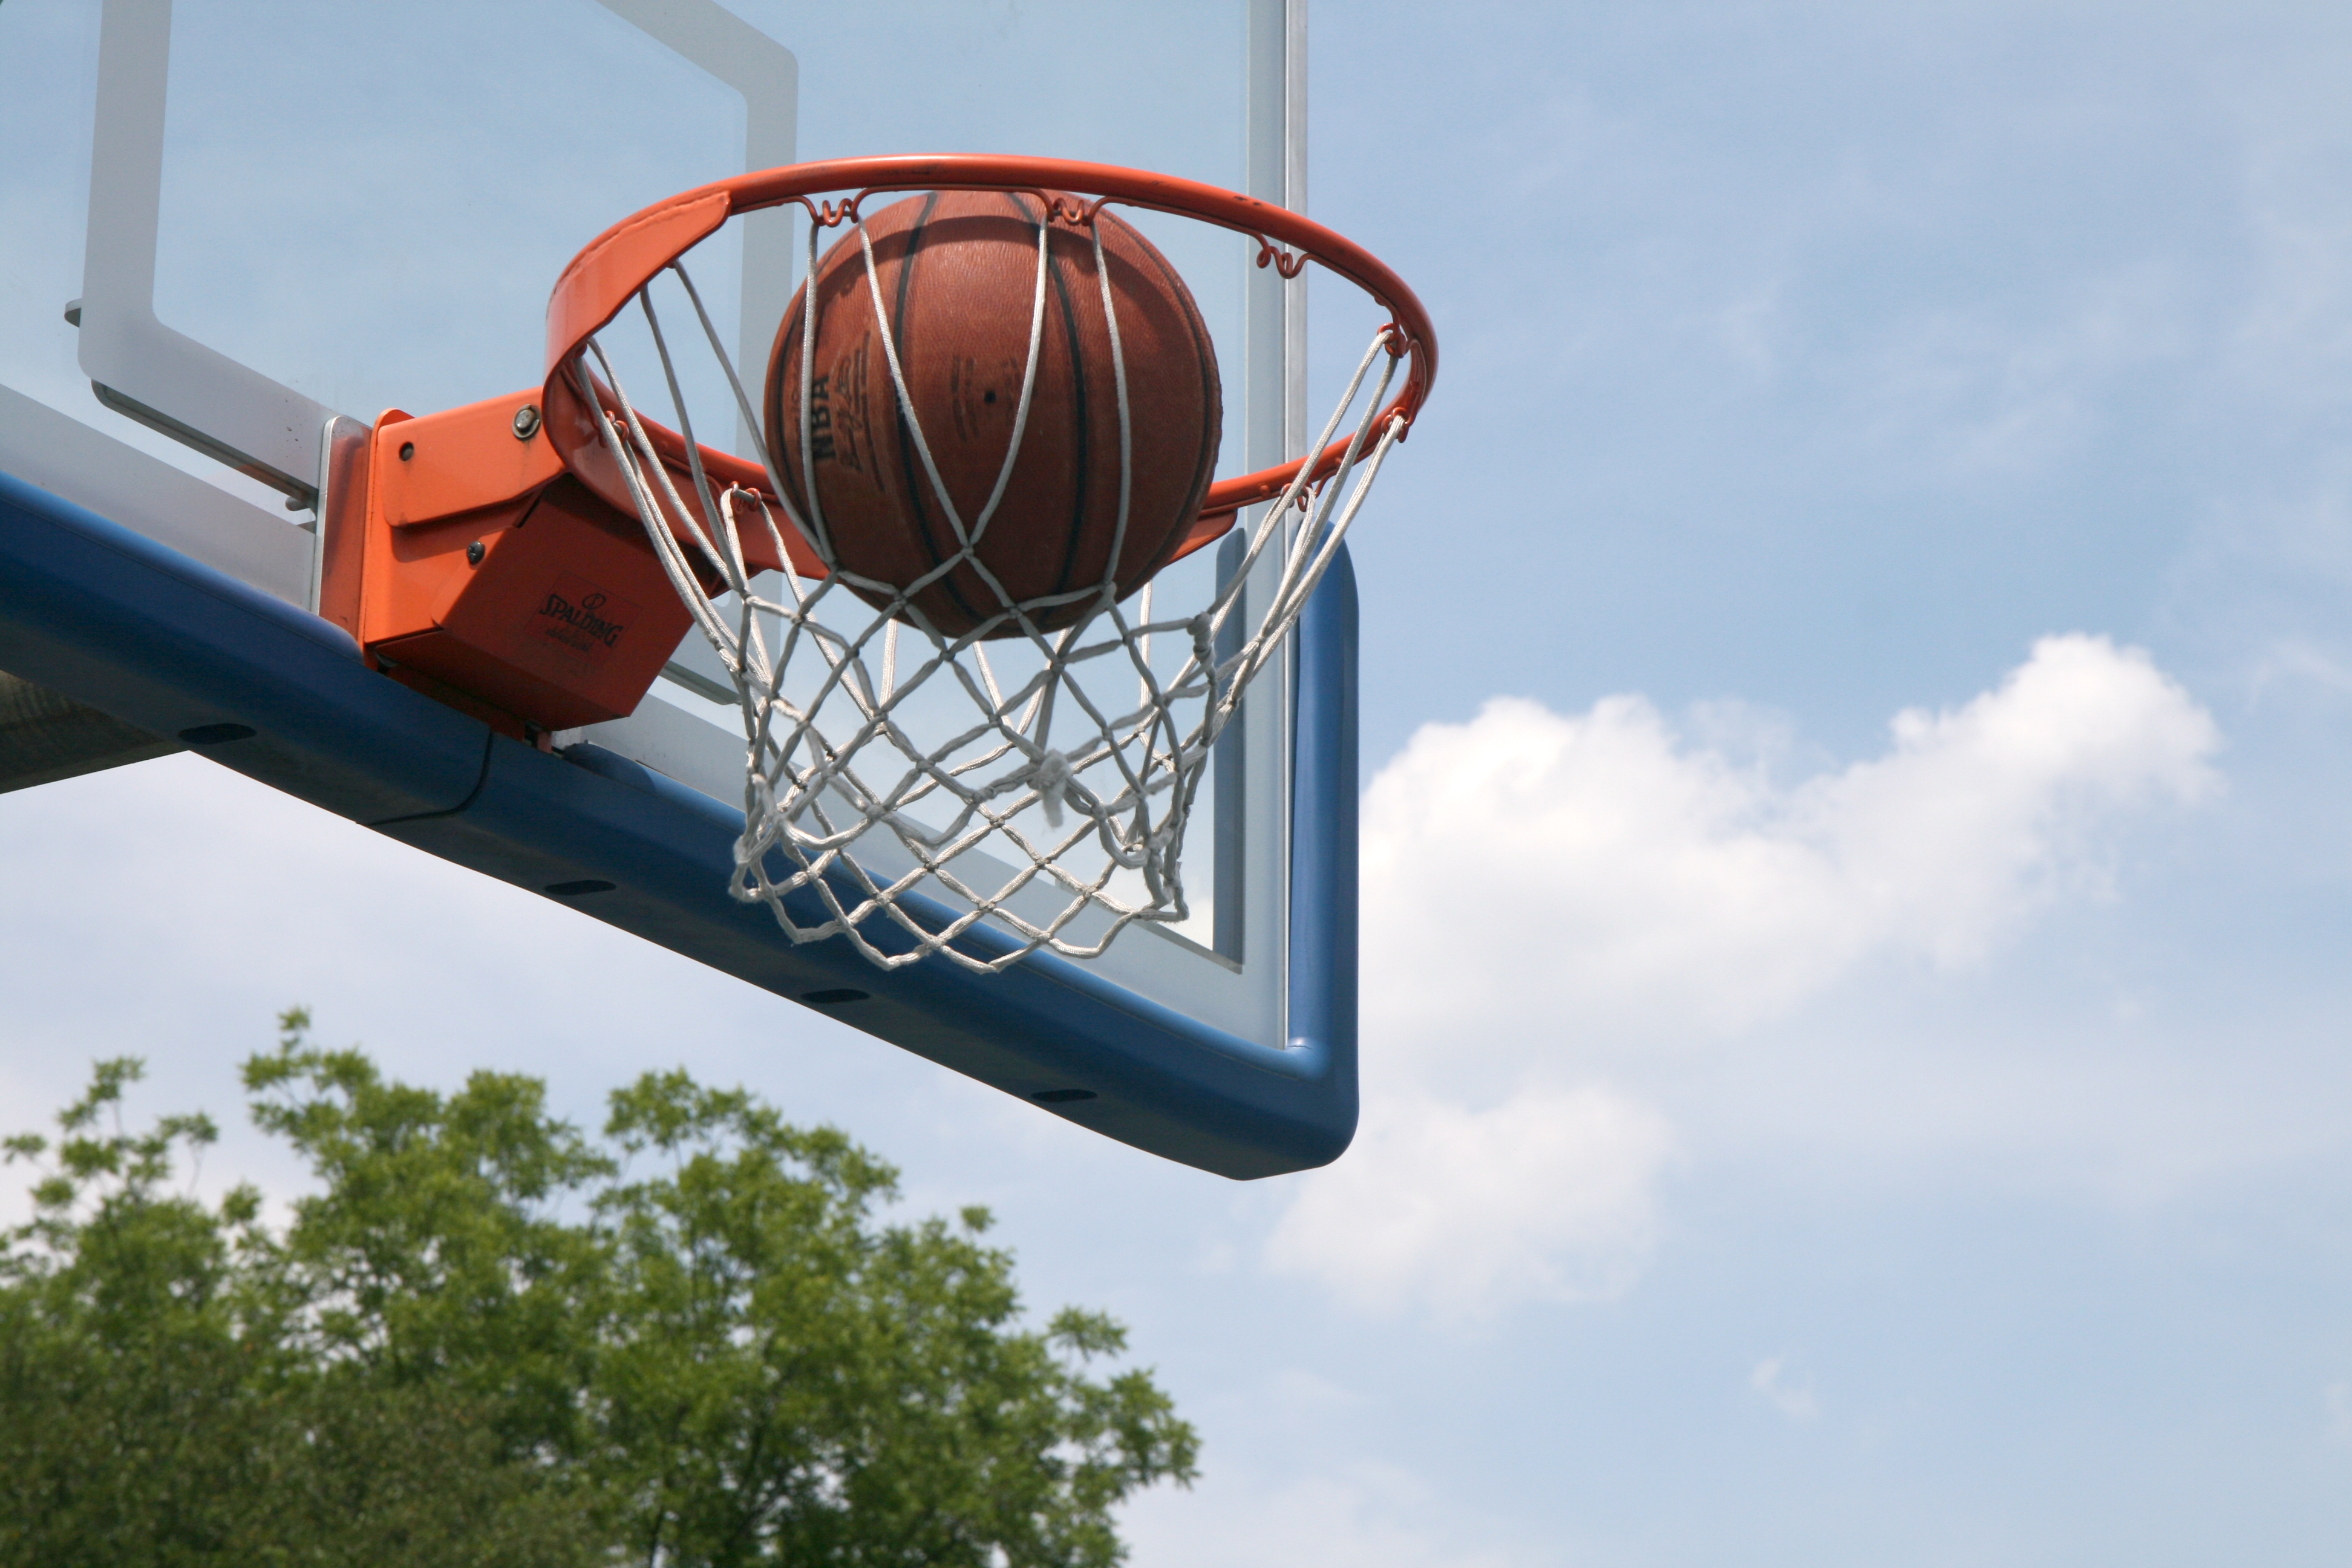 Basketball in basketball hoop.